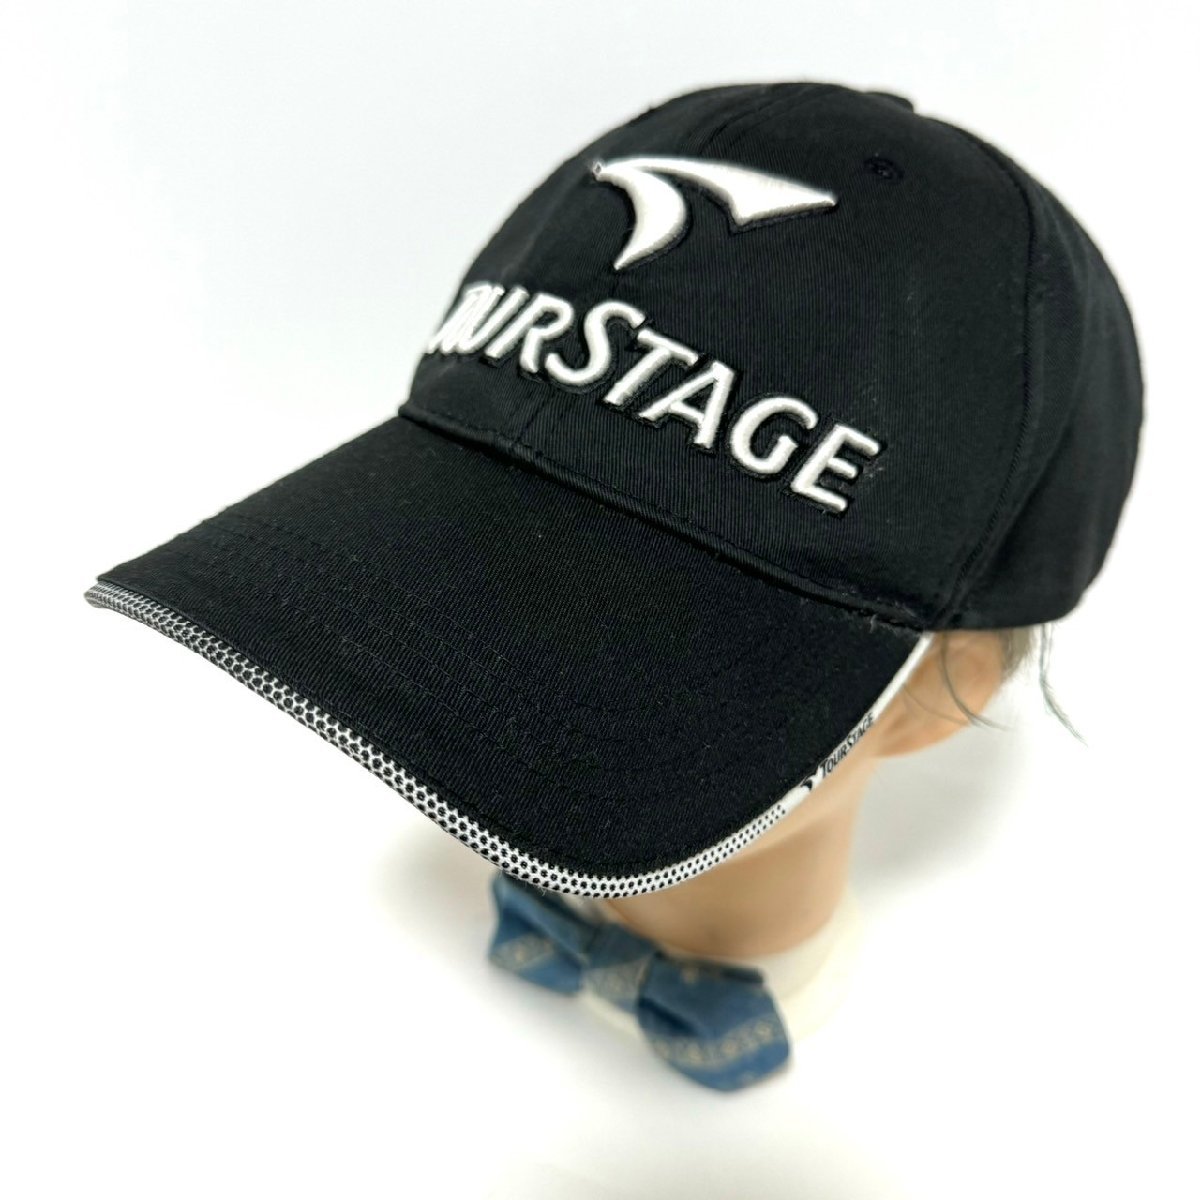 (^w^)b TOURSTAGE BRIDGESTONE Tour Stage Bridgestone колпак шляпа Logo вышивка GOLF Golf спорт чёрный LL 60~63.C0808EE